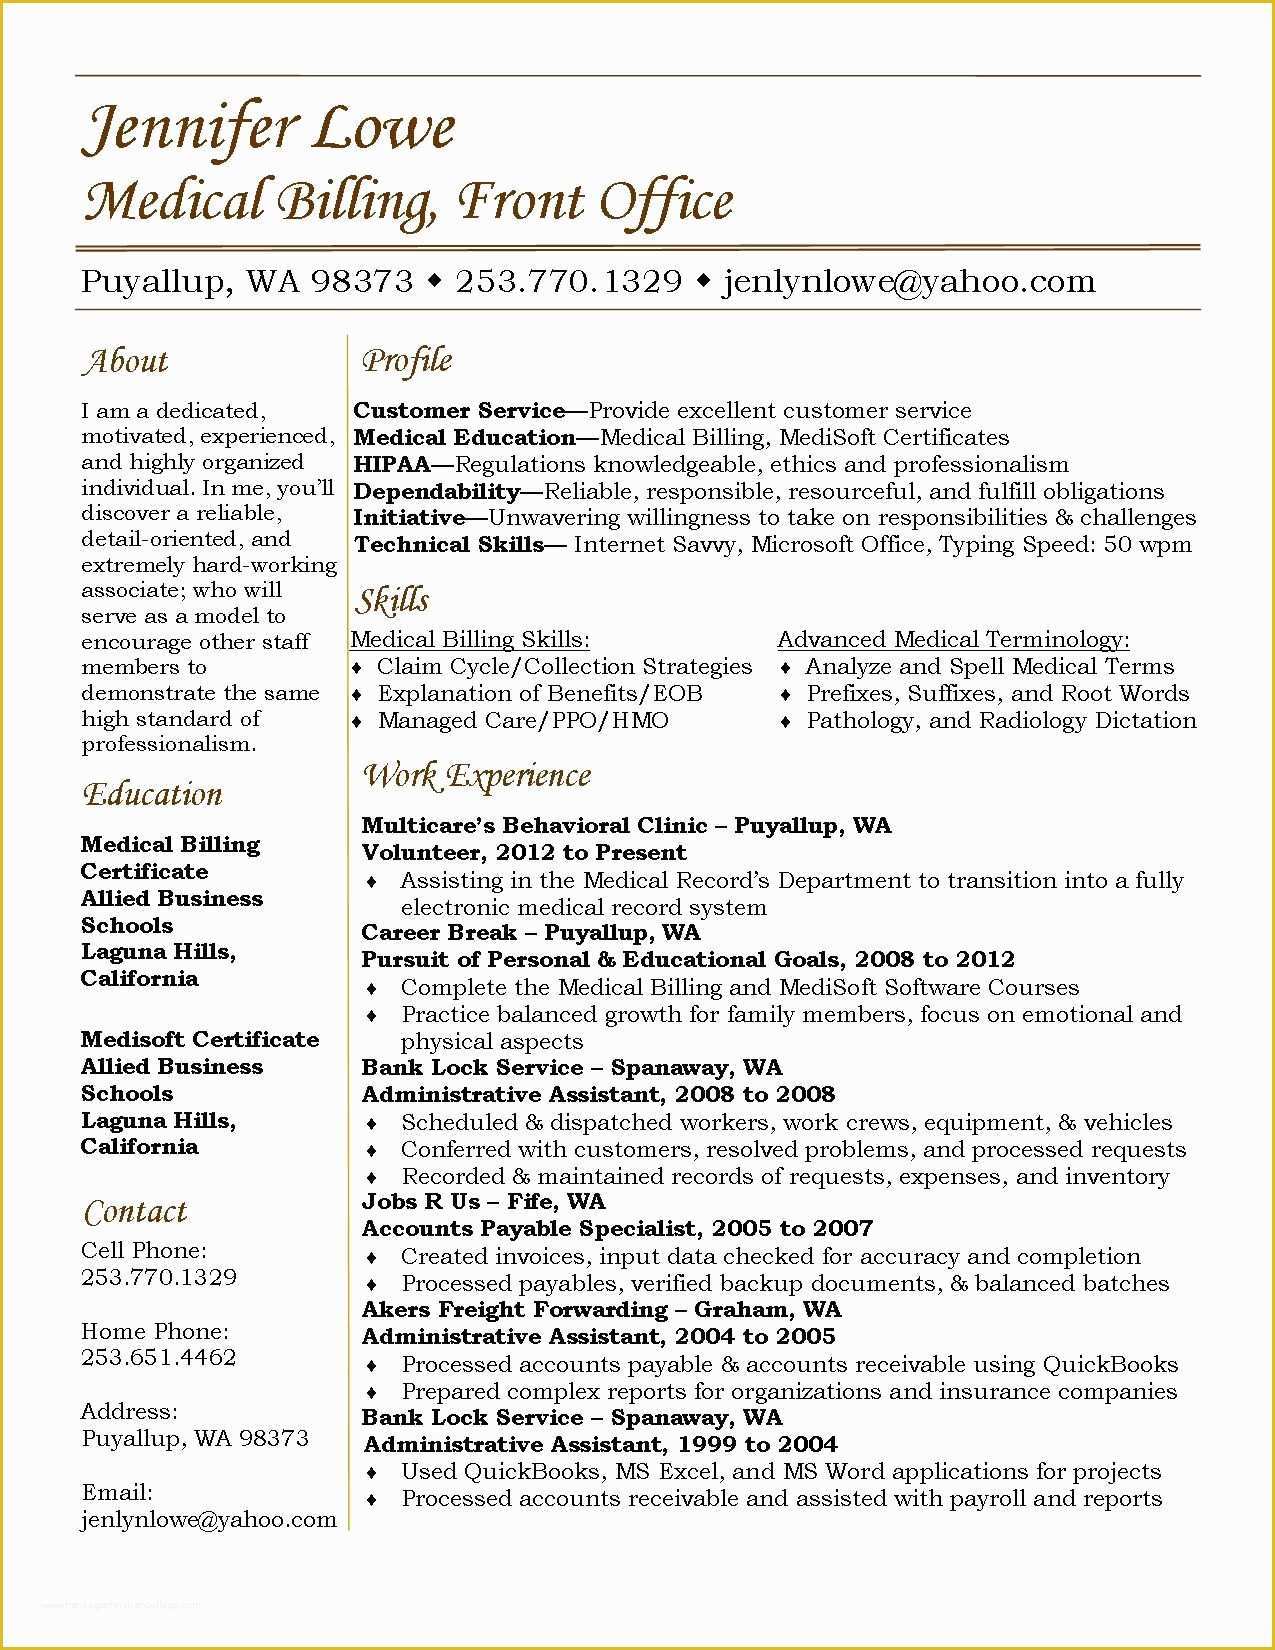 Medical Resume Template Free Of Jennifer Lowe Resume Medical Billing Resume Career